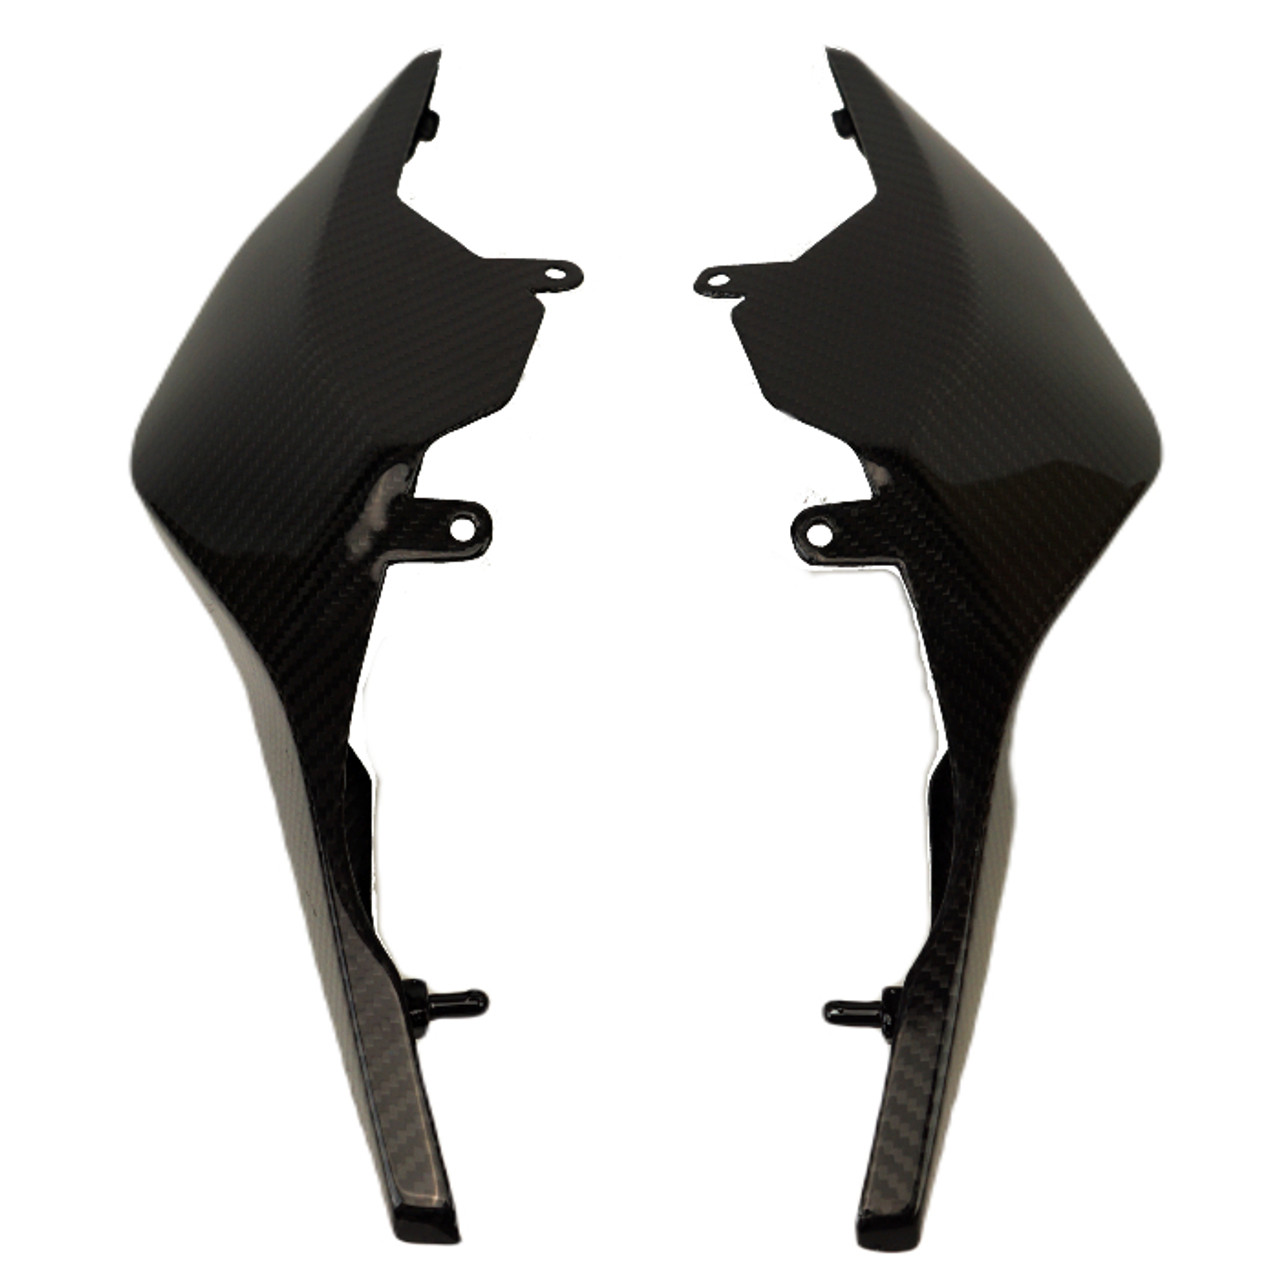 Tail Fairings in Glossy Twill Weave Carbon Fiber for Honda CBR650R 2019-2020